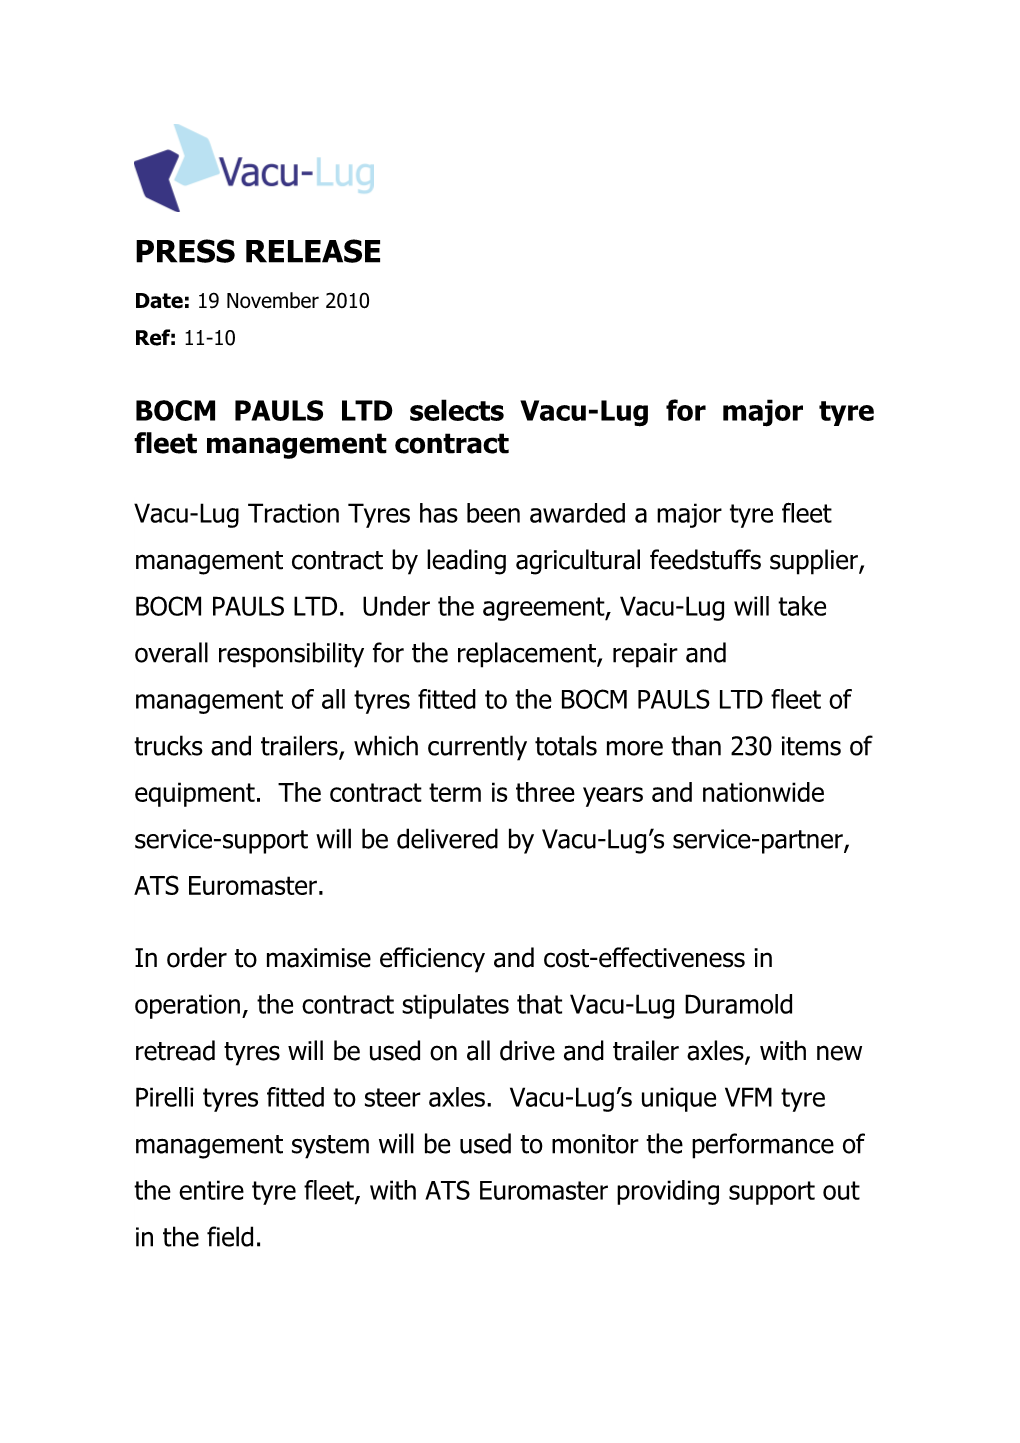 BOCM PAULS LTD Selects Vacu-Lug for Major Tyre Fleet Management Contract